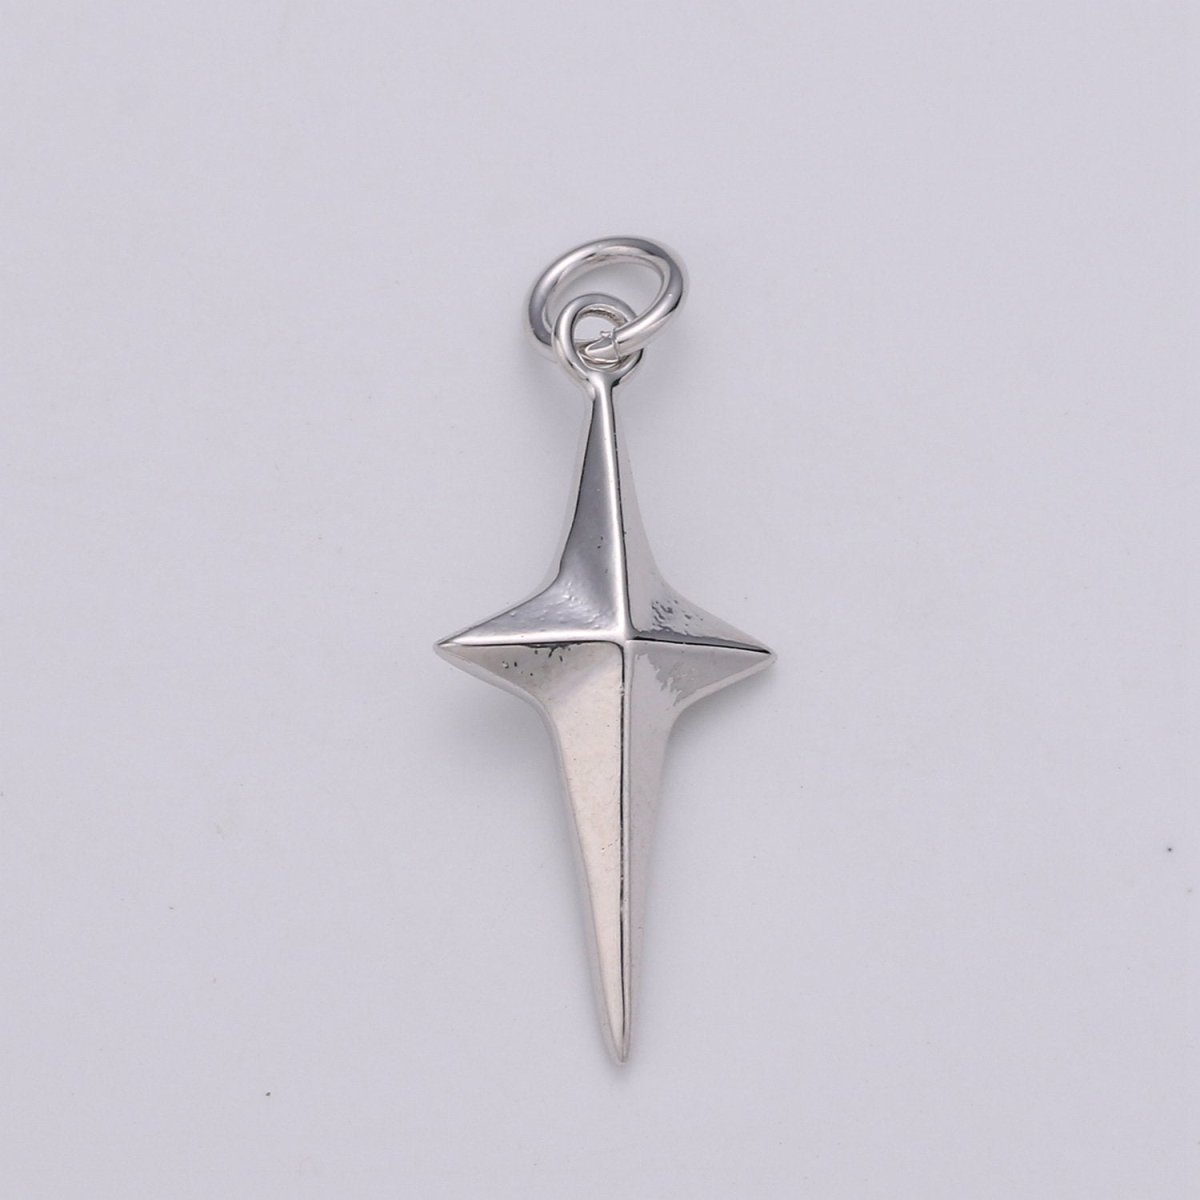 25x10mm Silver North Star Charms, Silver Star Pendant, Celestial Jewelry Minimalist Jewelry Making supply D-580 - DLUXCA